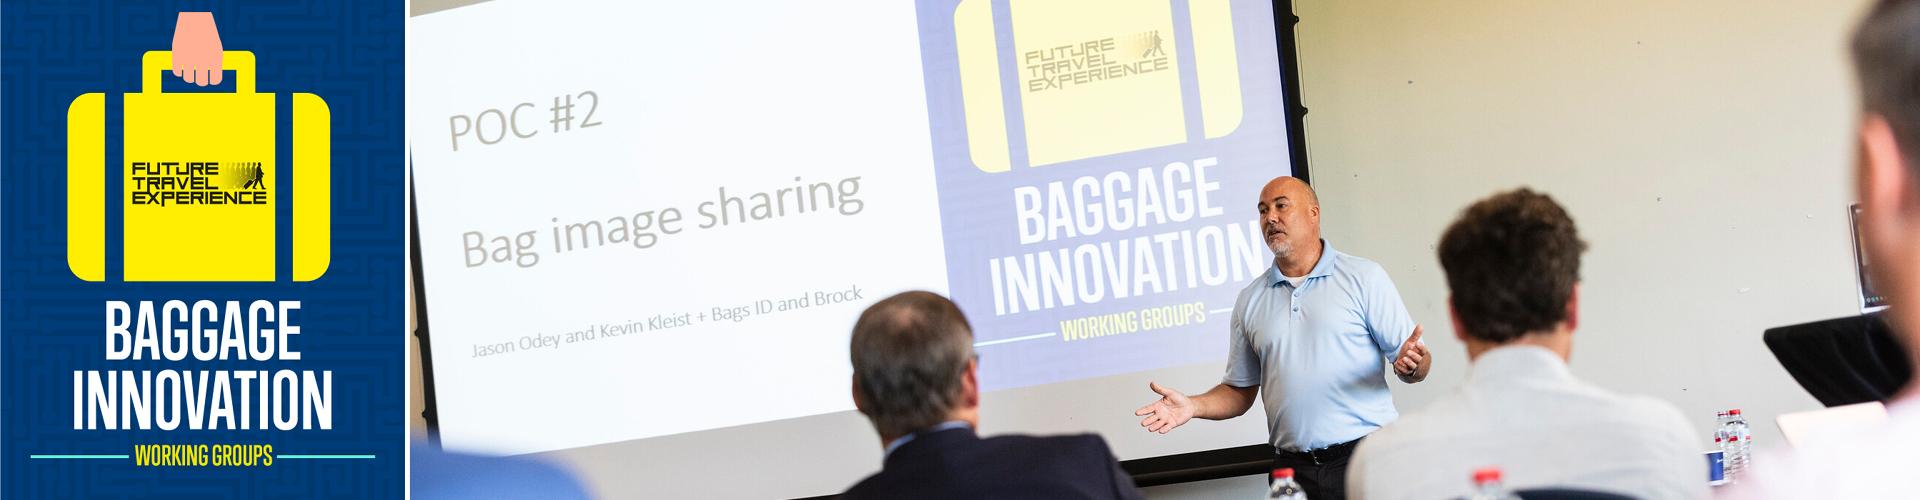 Baggage innovation group meeting